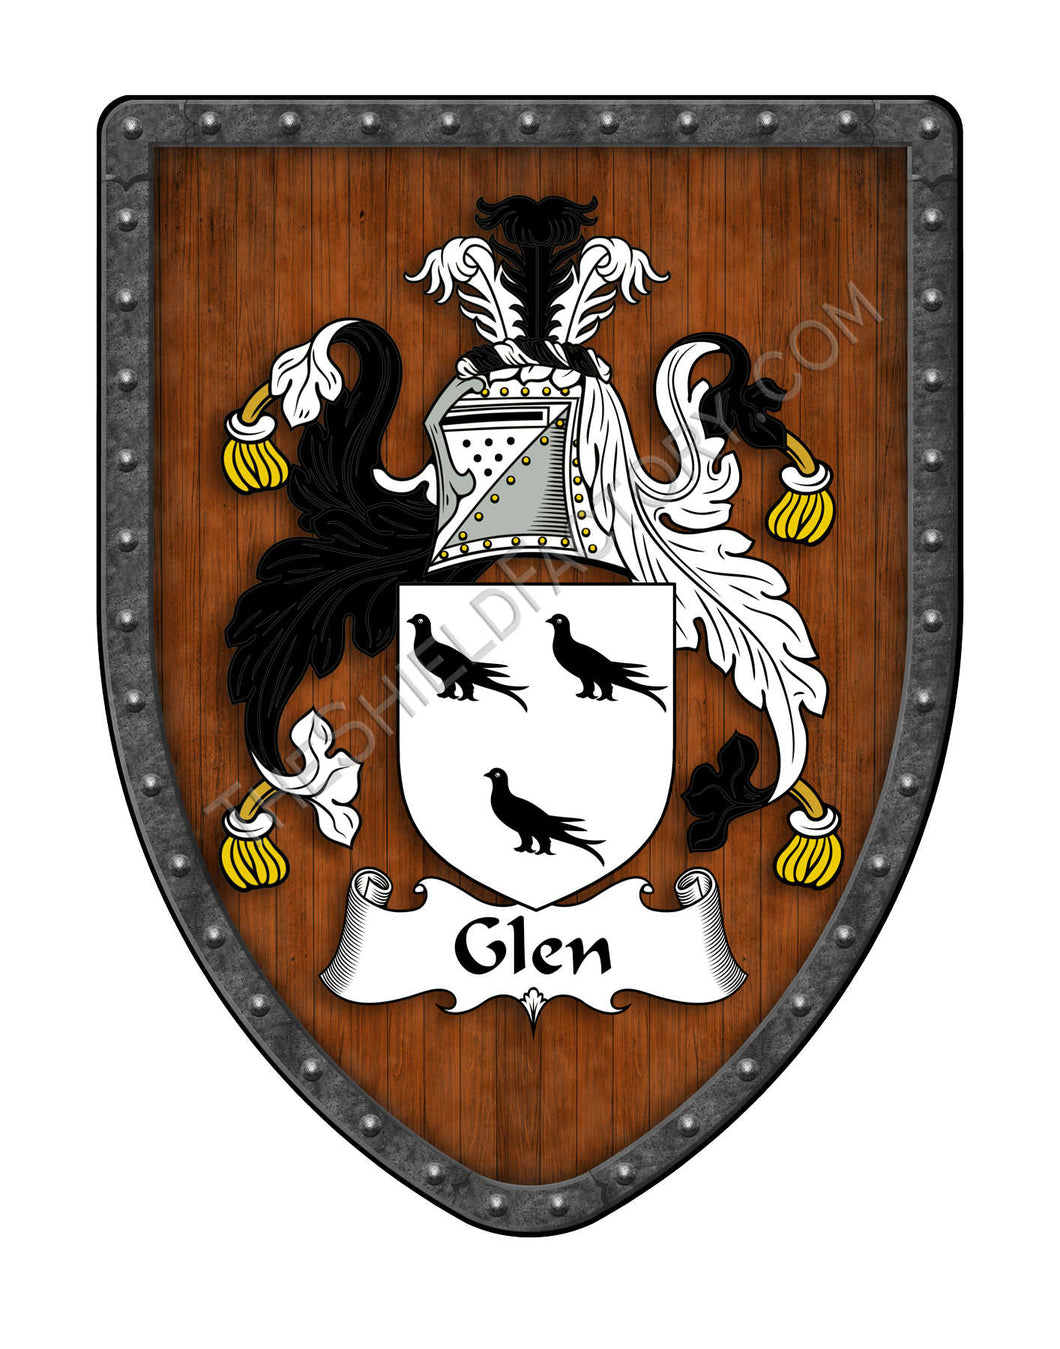 Glen Coat of Arms Shield